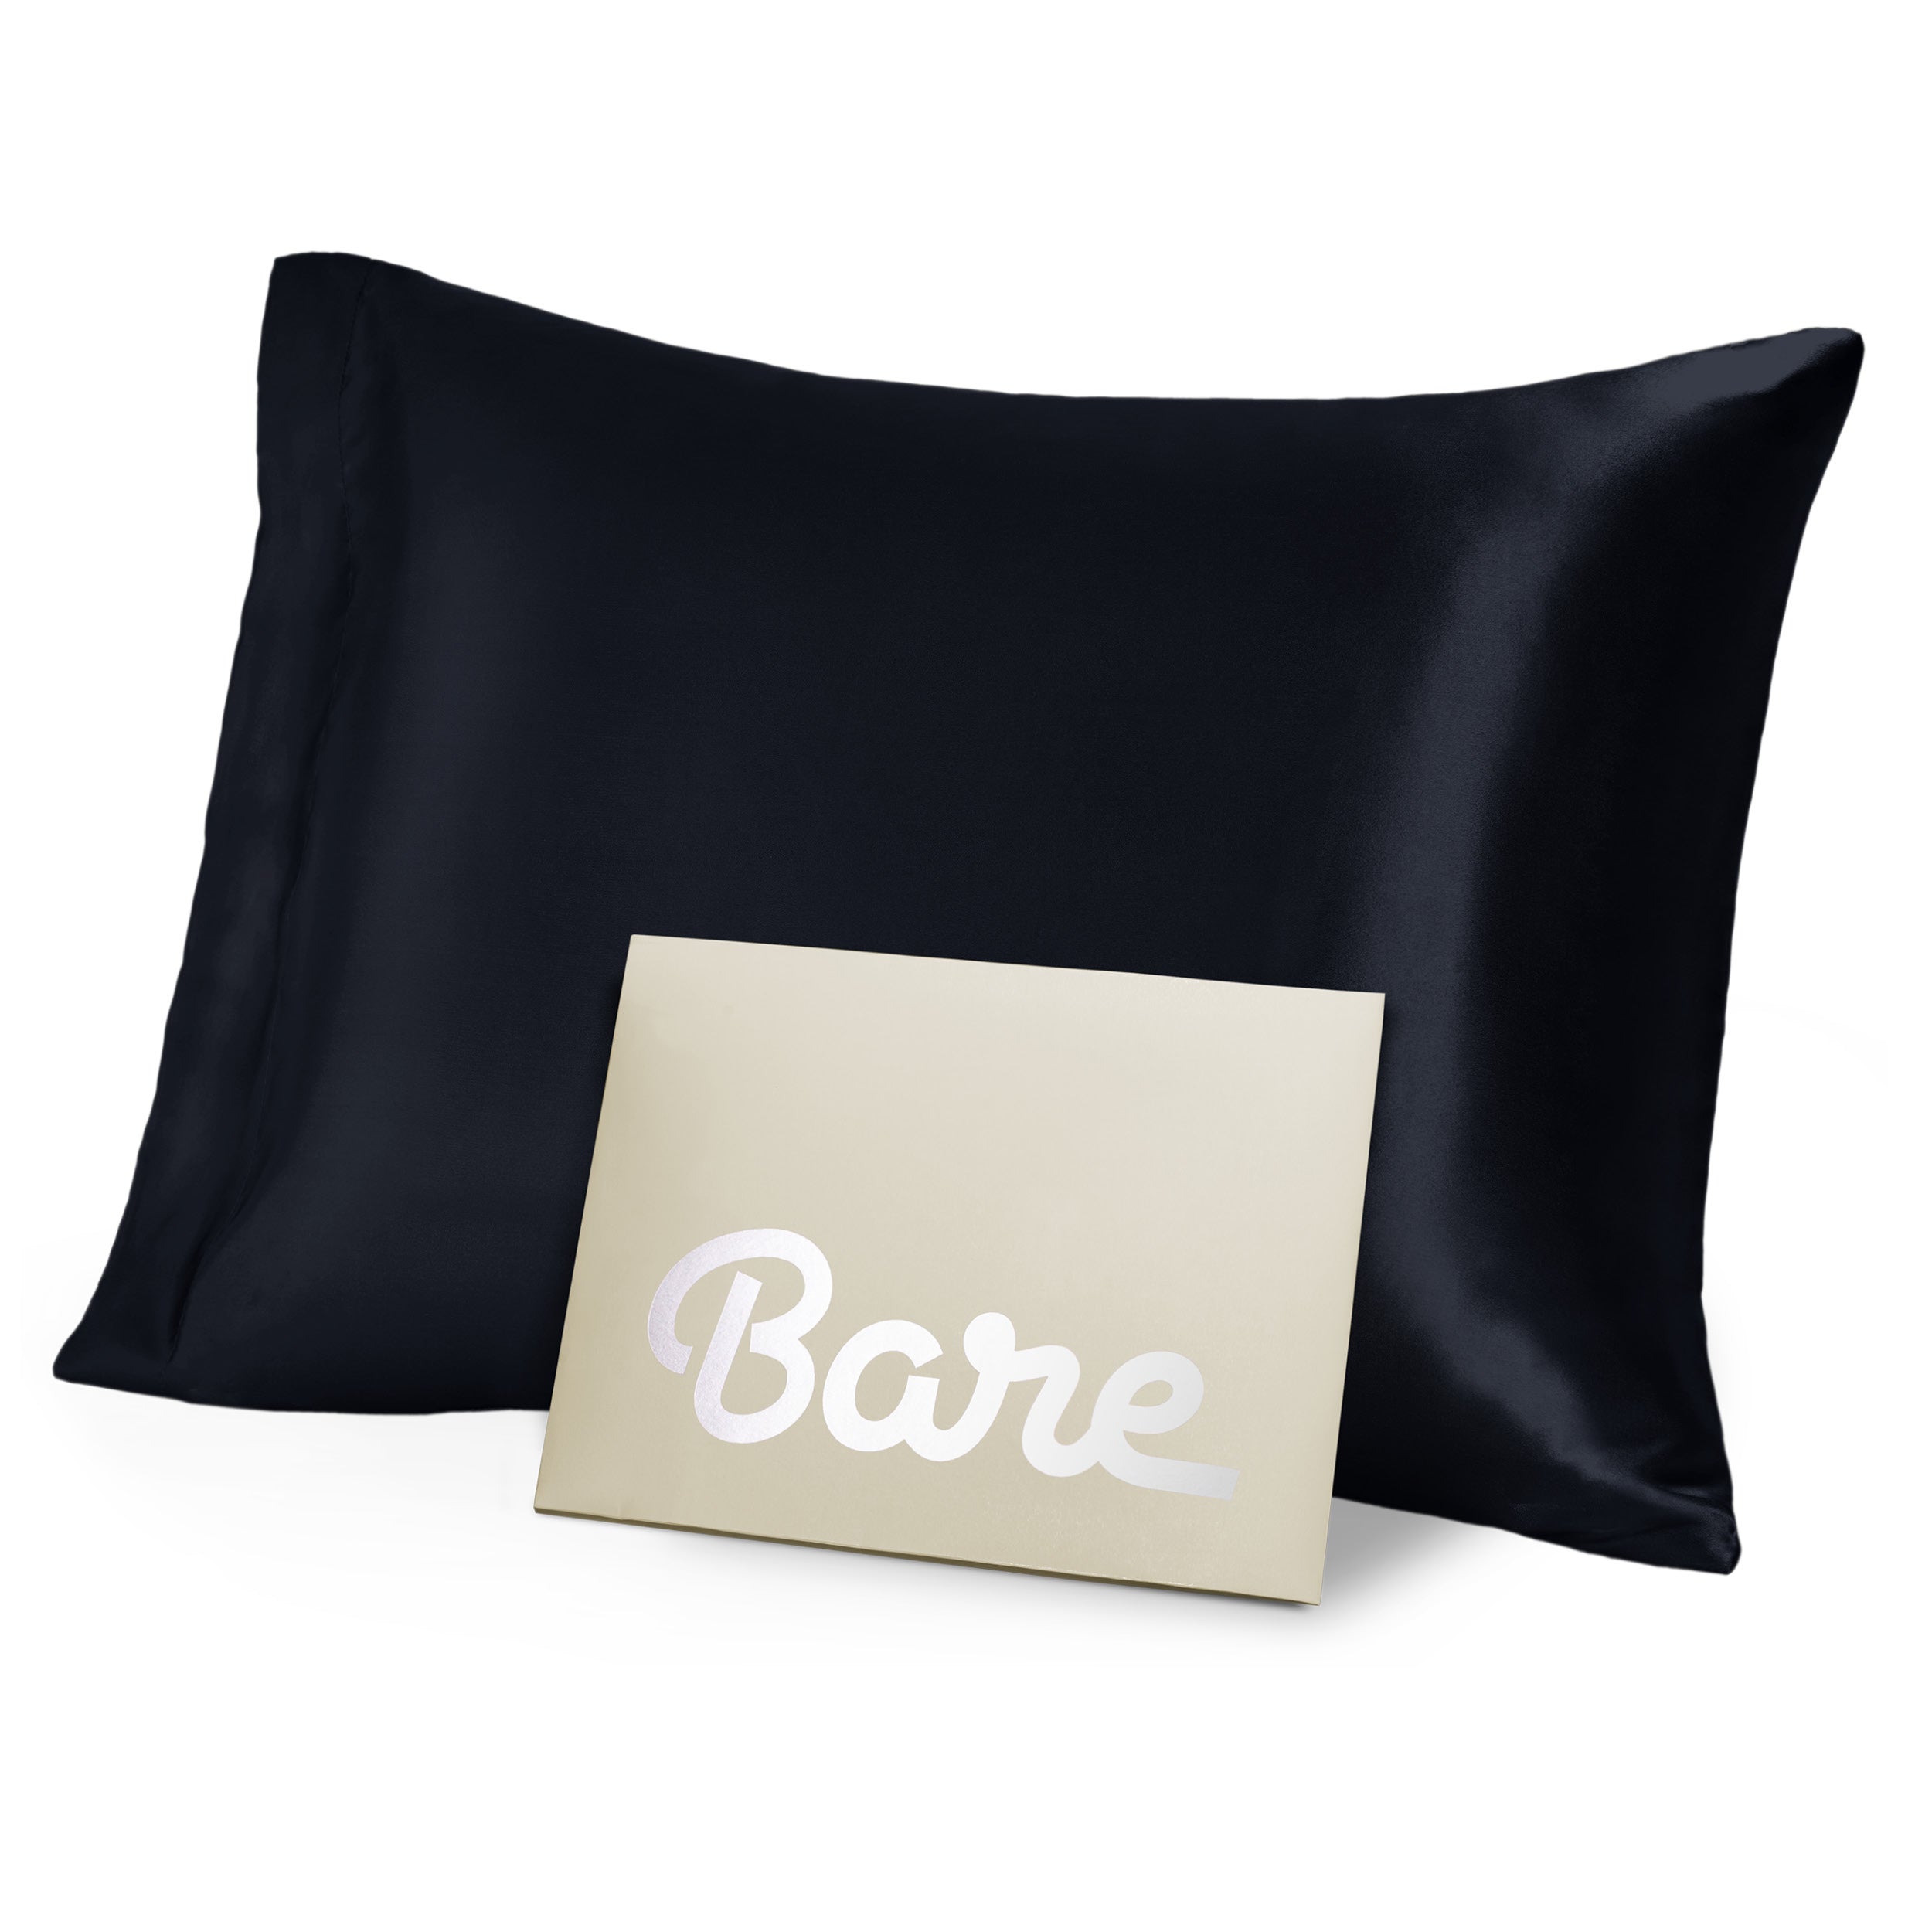 A black mulberry silk pillowcase on a pillow